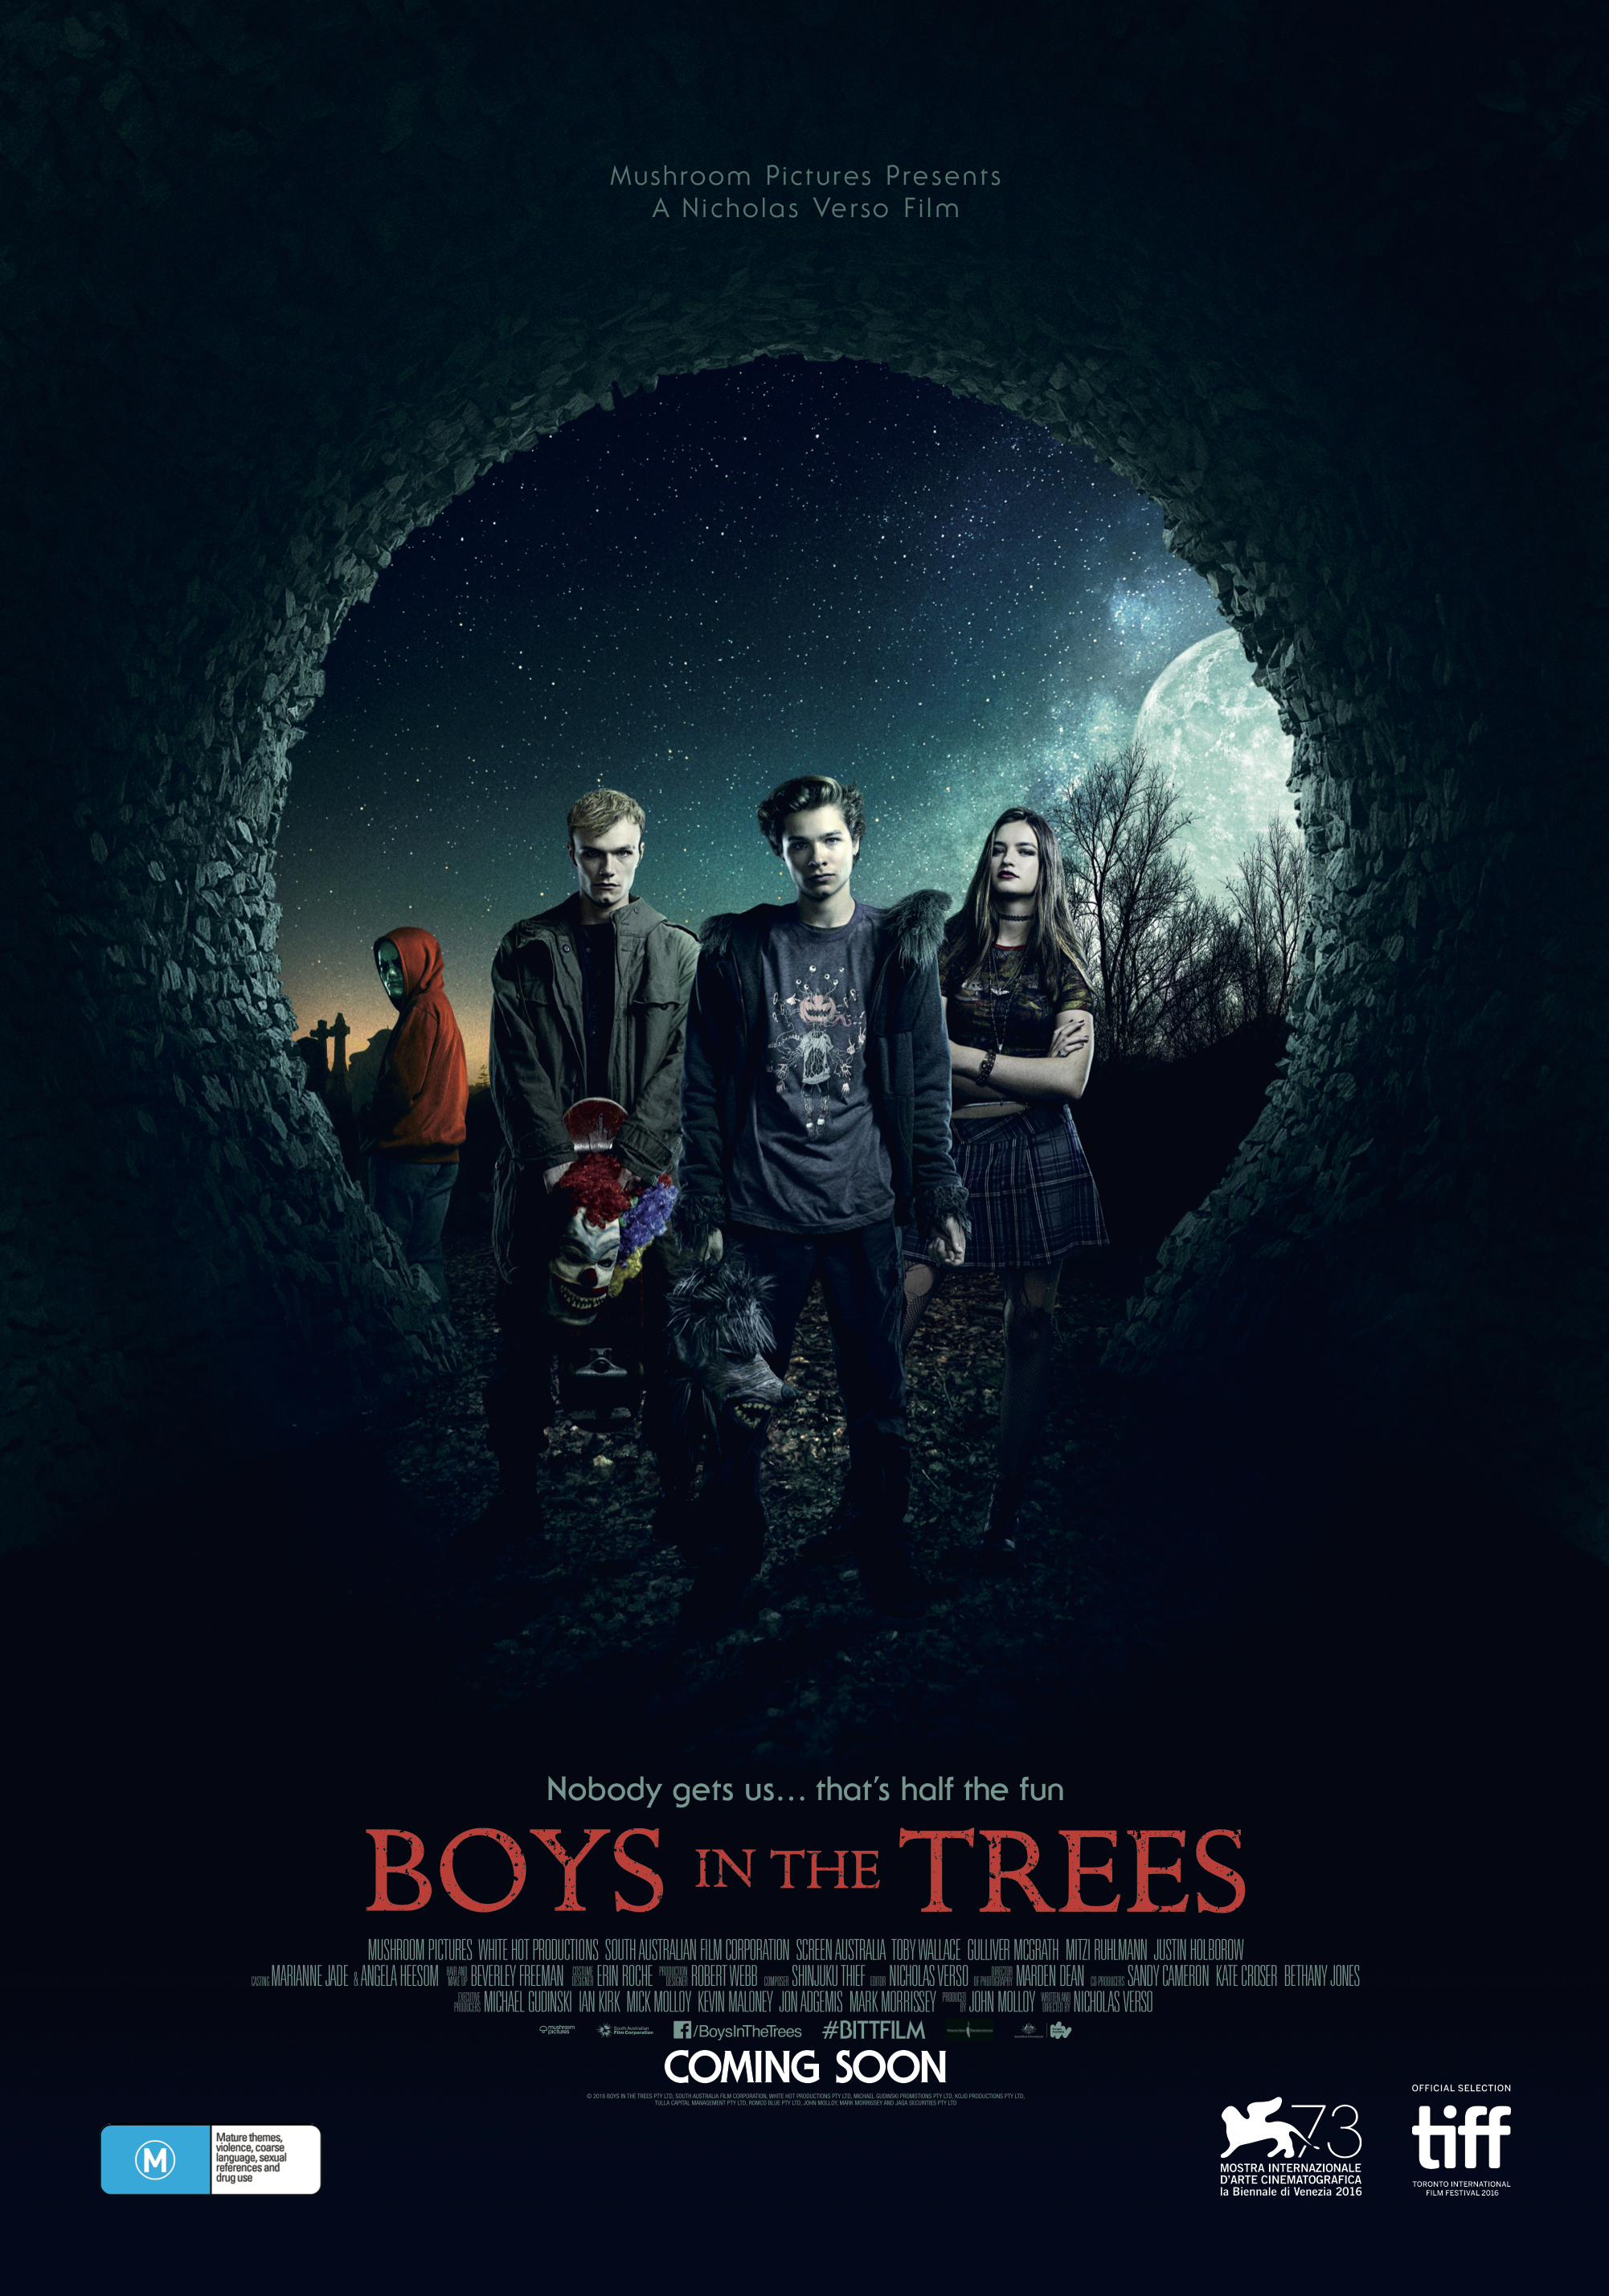 Nonton film Boys in the Trees layarkaca21 indoxx1 ganool online streaming terbaru